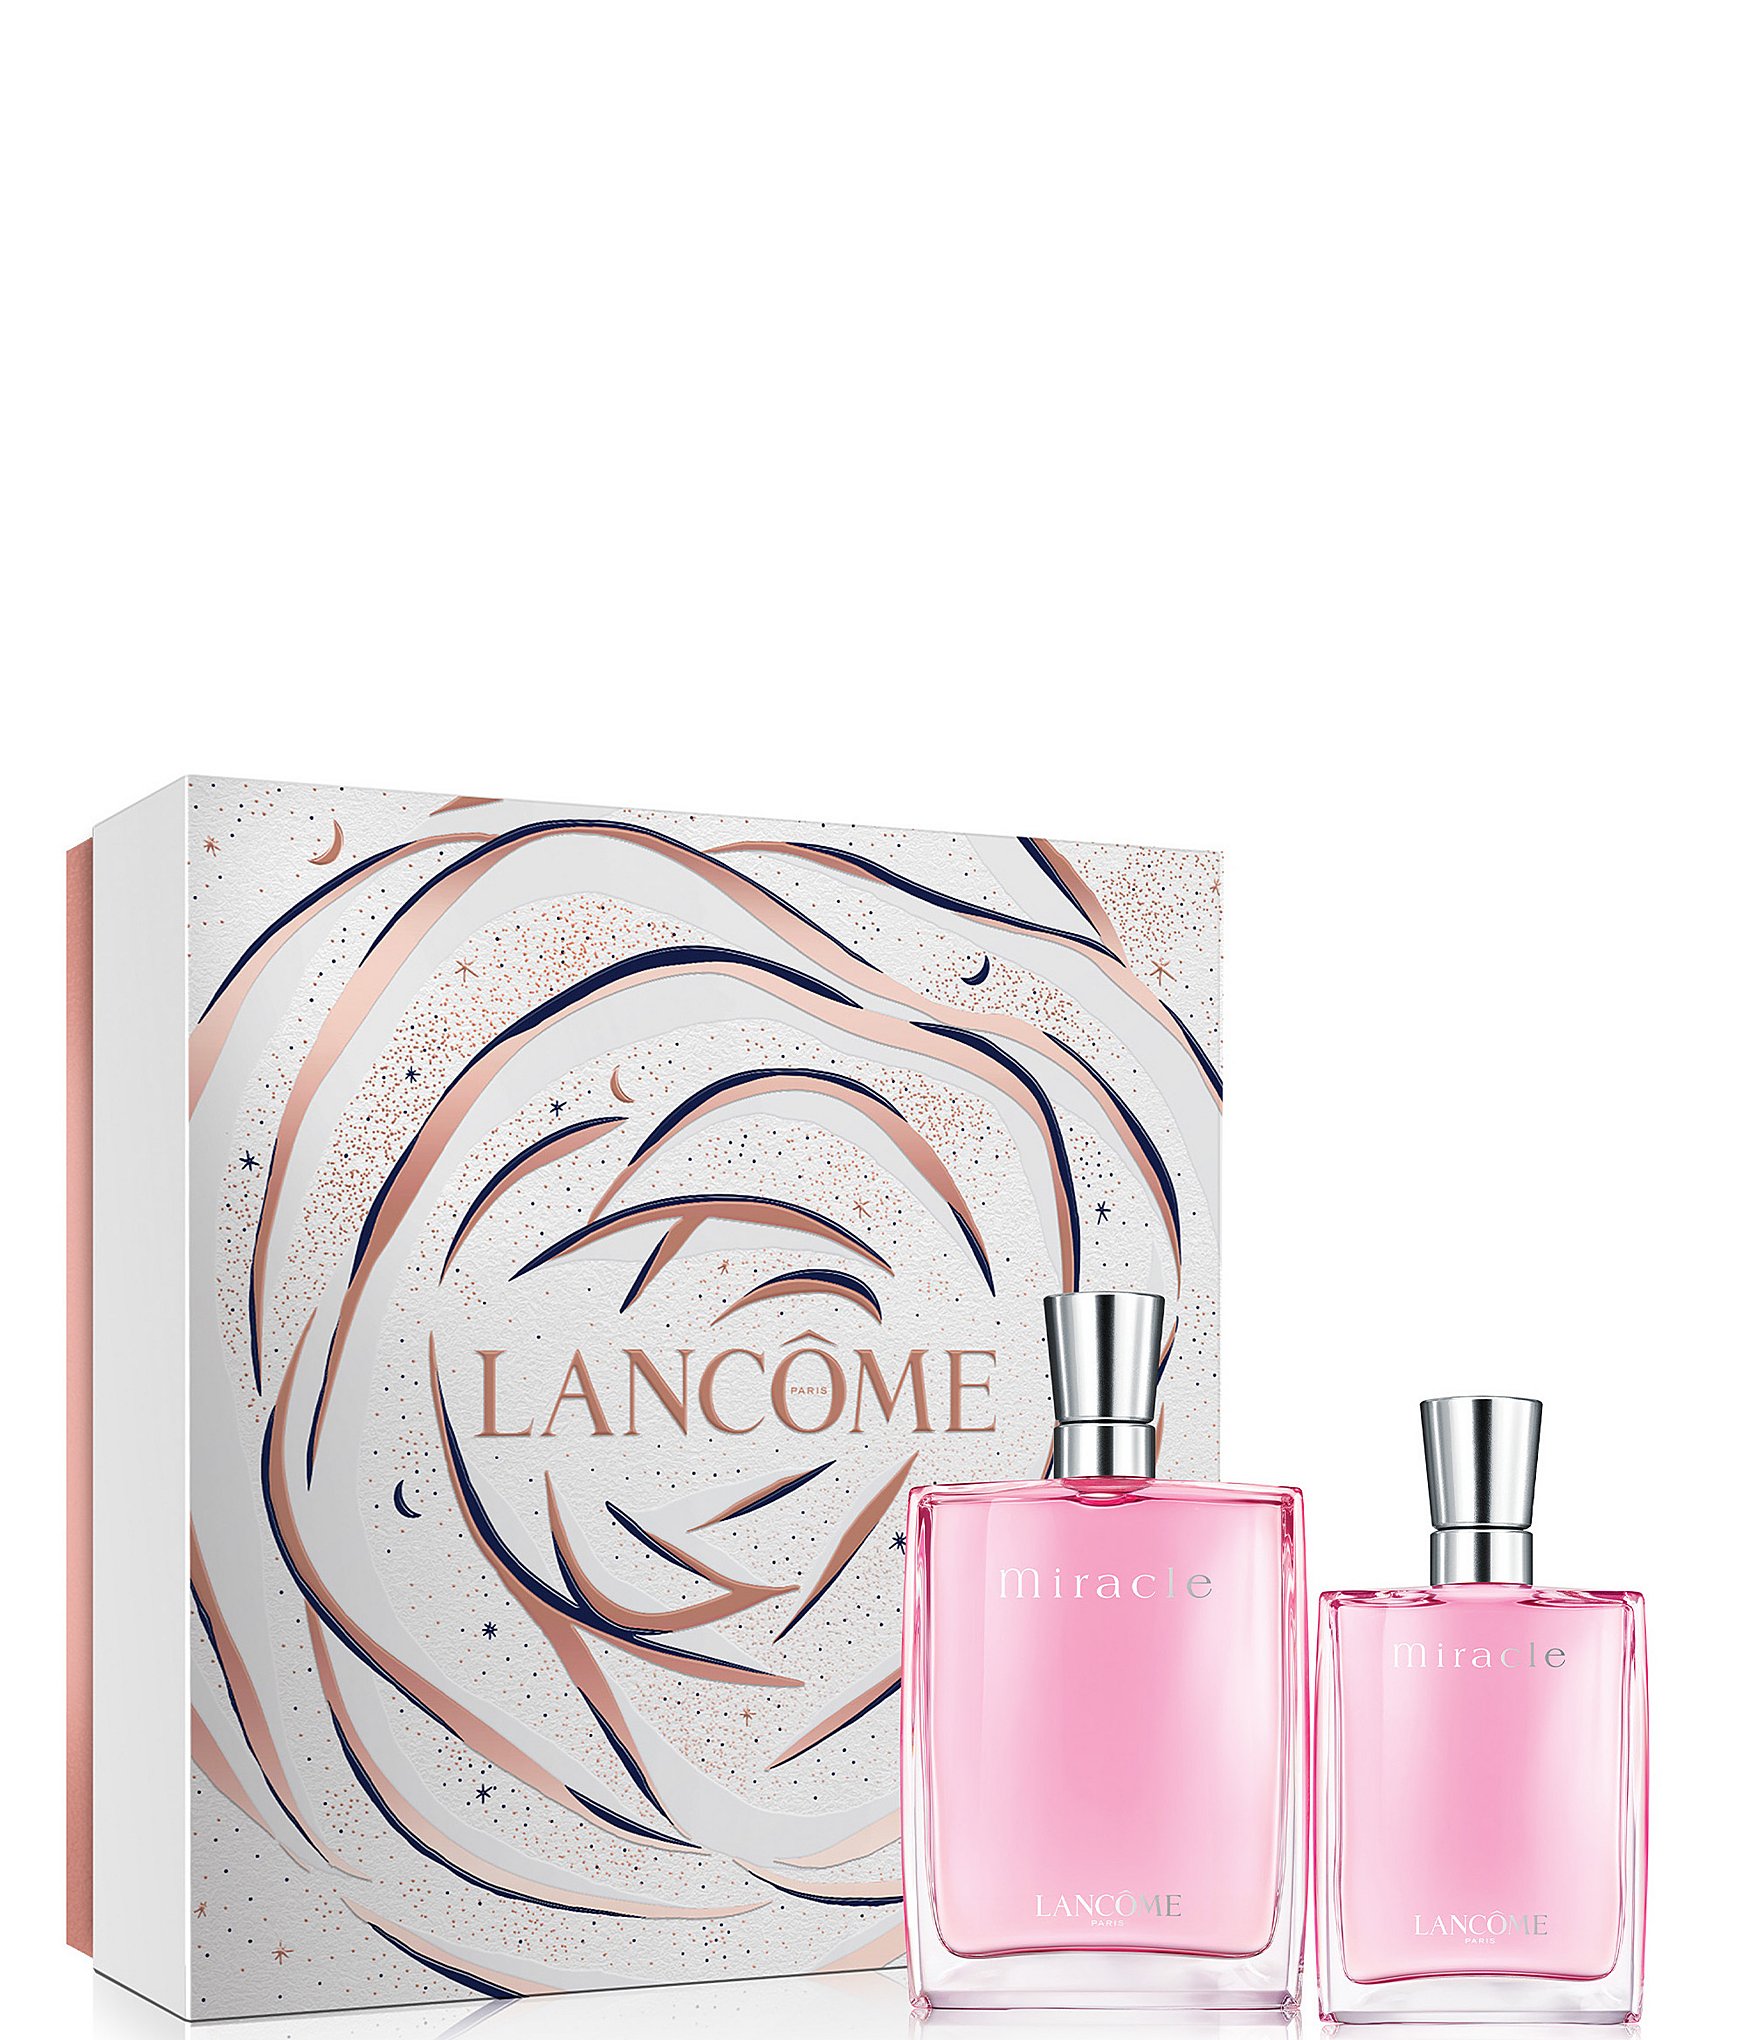 Lancome Miracle Moments Eau de Parfum Holiday Gift Set | Dillard's